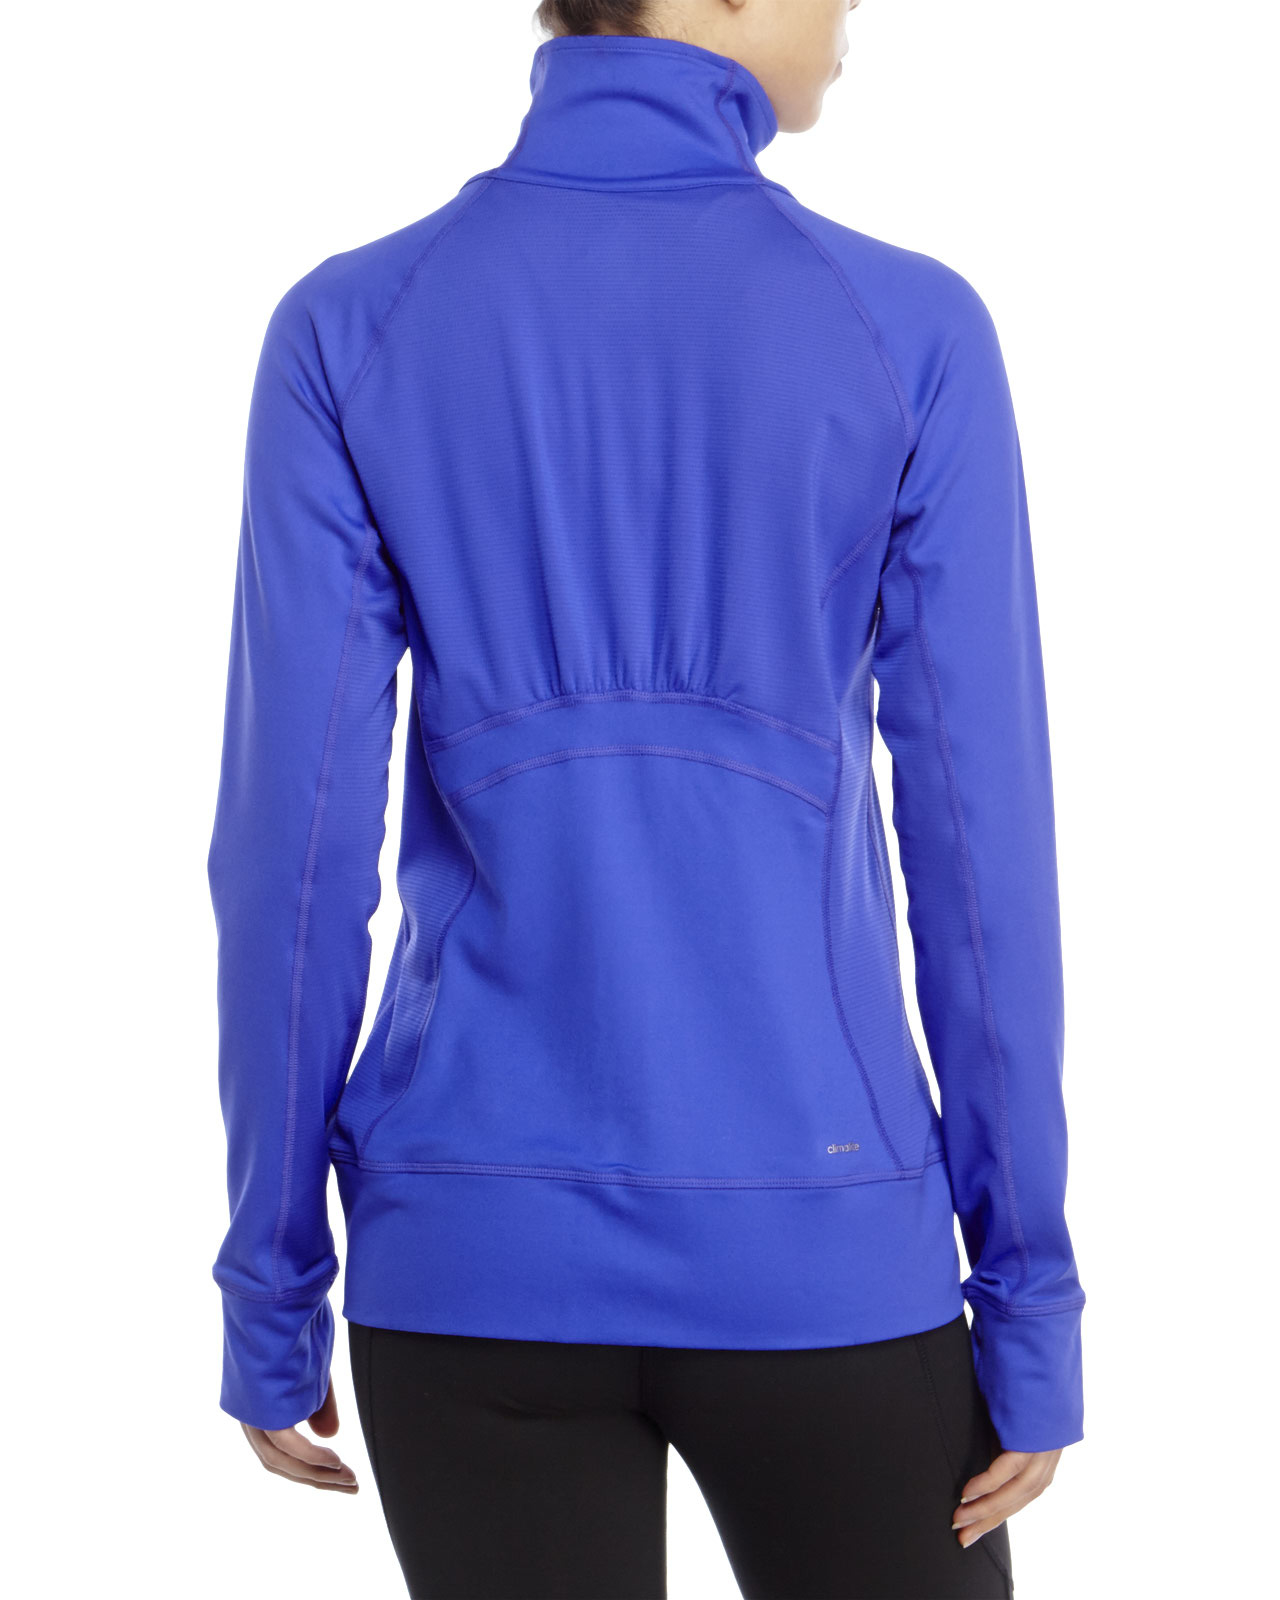 Lyst - Adidas Royal Blue Ultimate Zip-Up Performance Sweatshirt in Blue